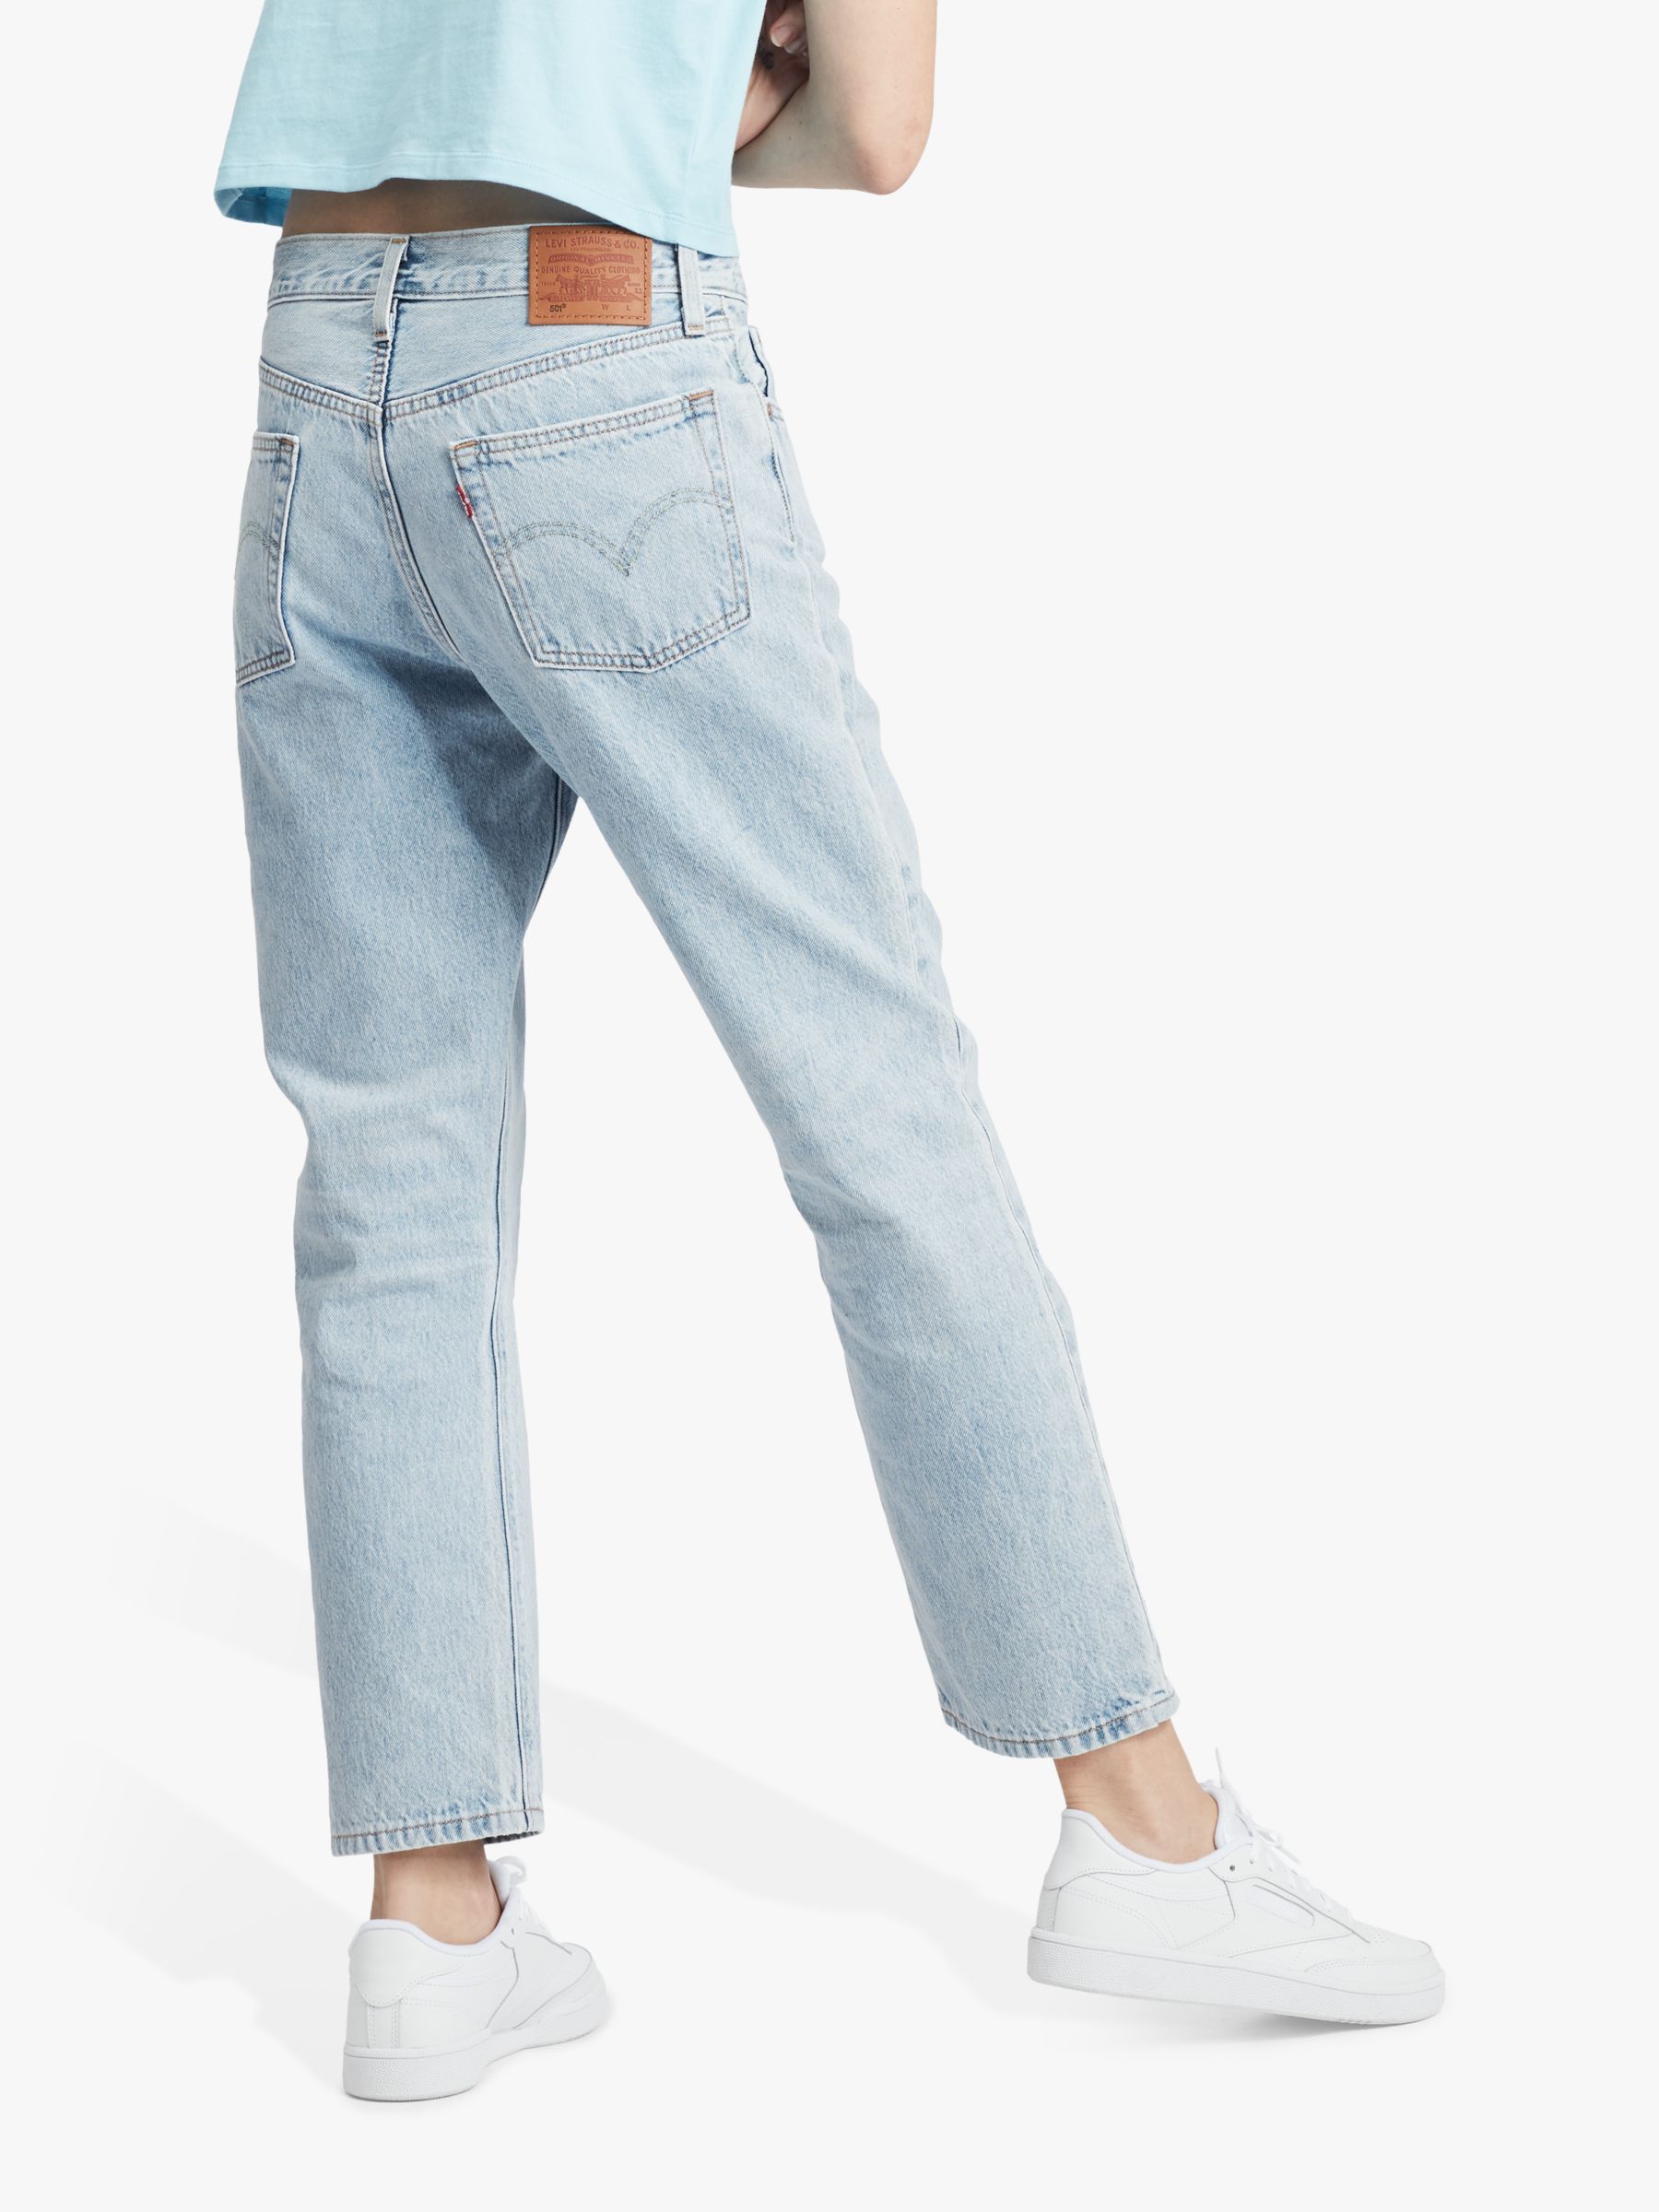 levis 501 crop jeans white